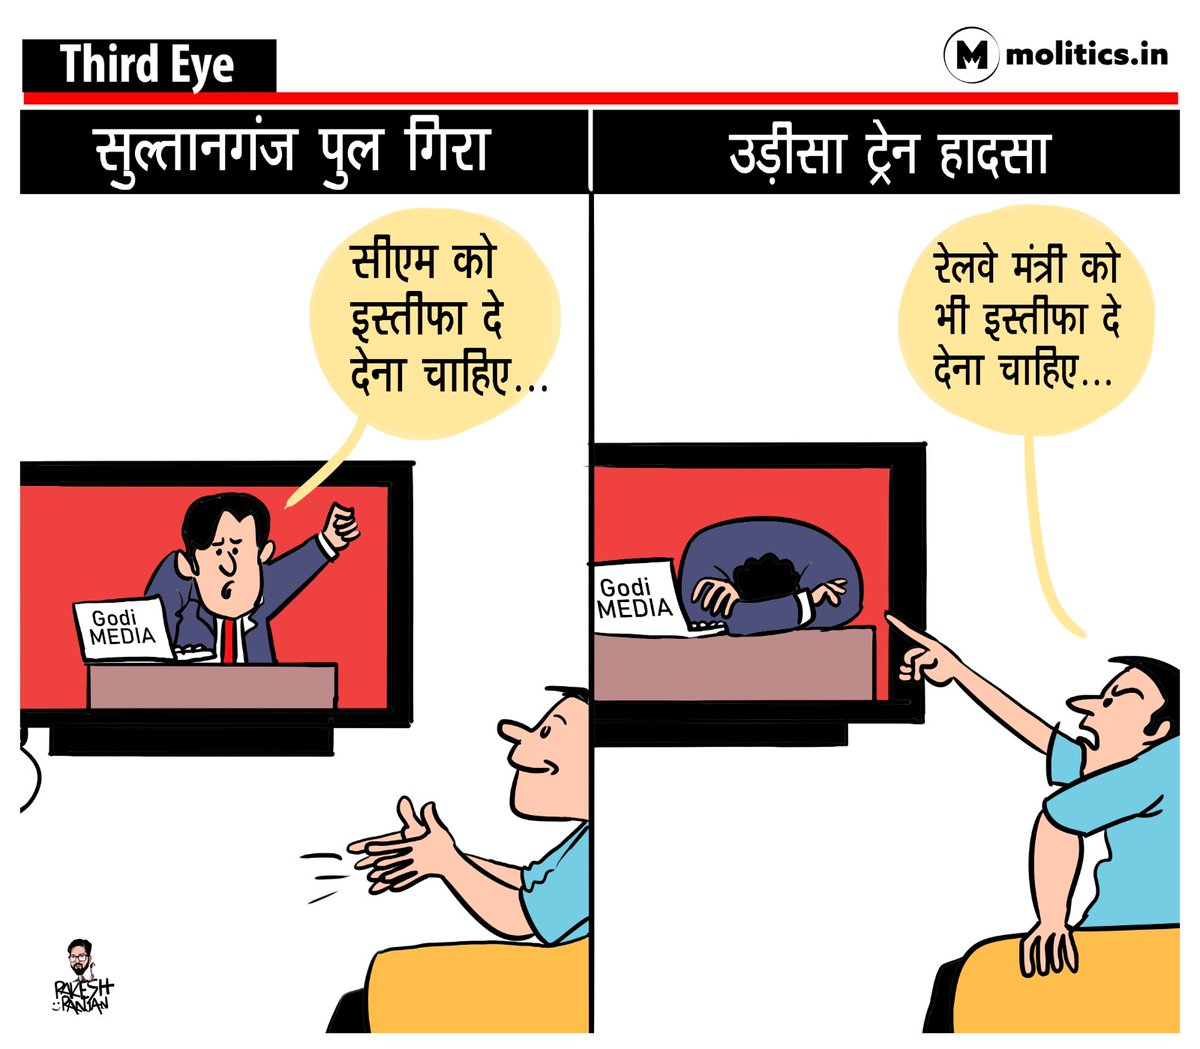 गोदी मीडिया का डबल रोल..!
#TrainAccidentInOdisha 
- @cartoonistrrs